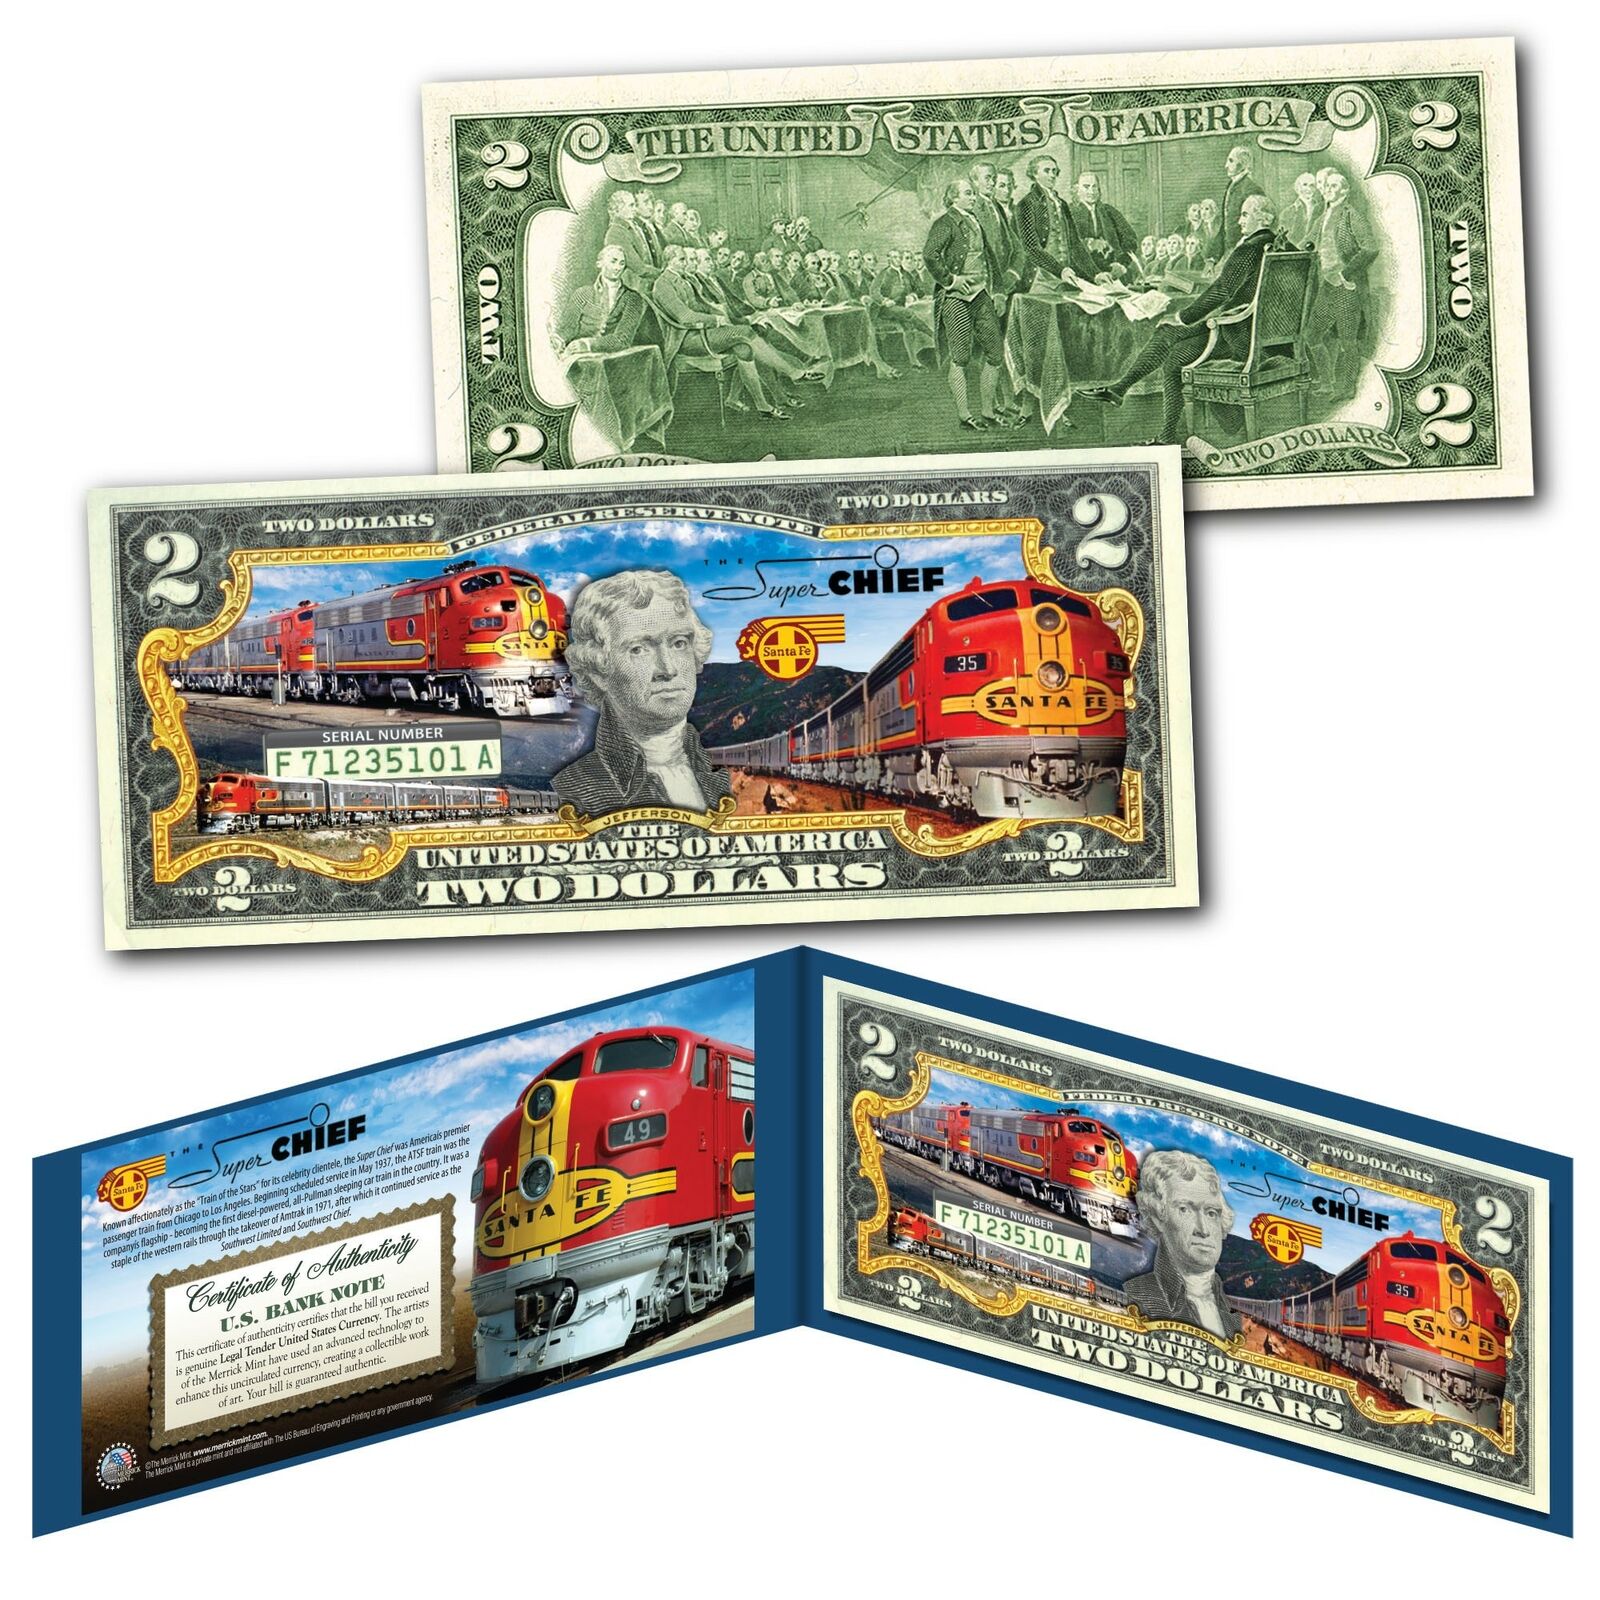 SUPER CHIEF Train of the Stars Santa Fe Railroad Genuine Legal Tender $2 US Bill